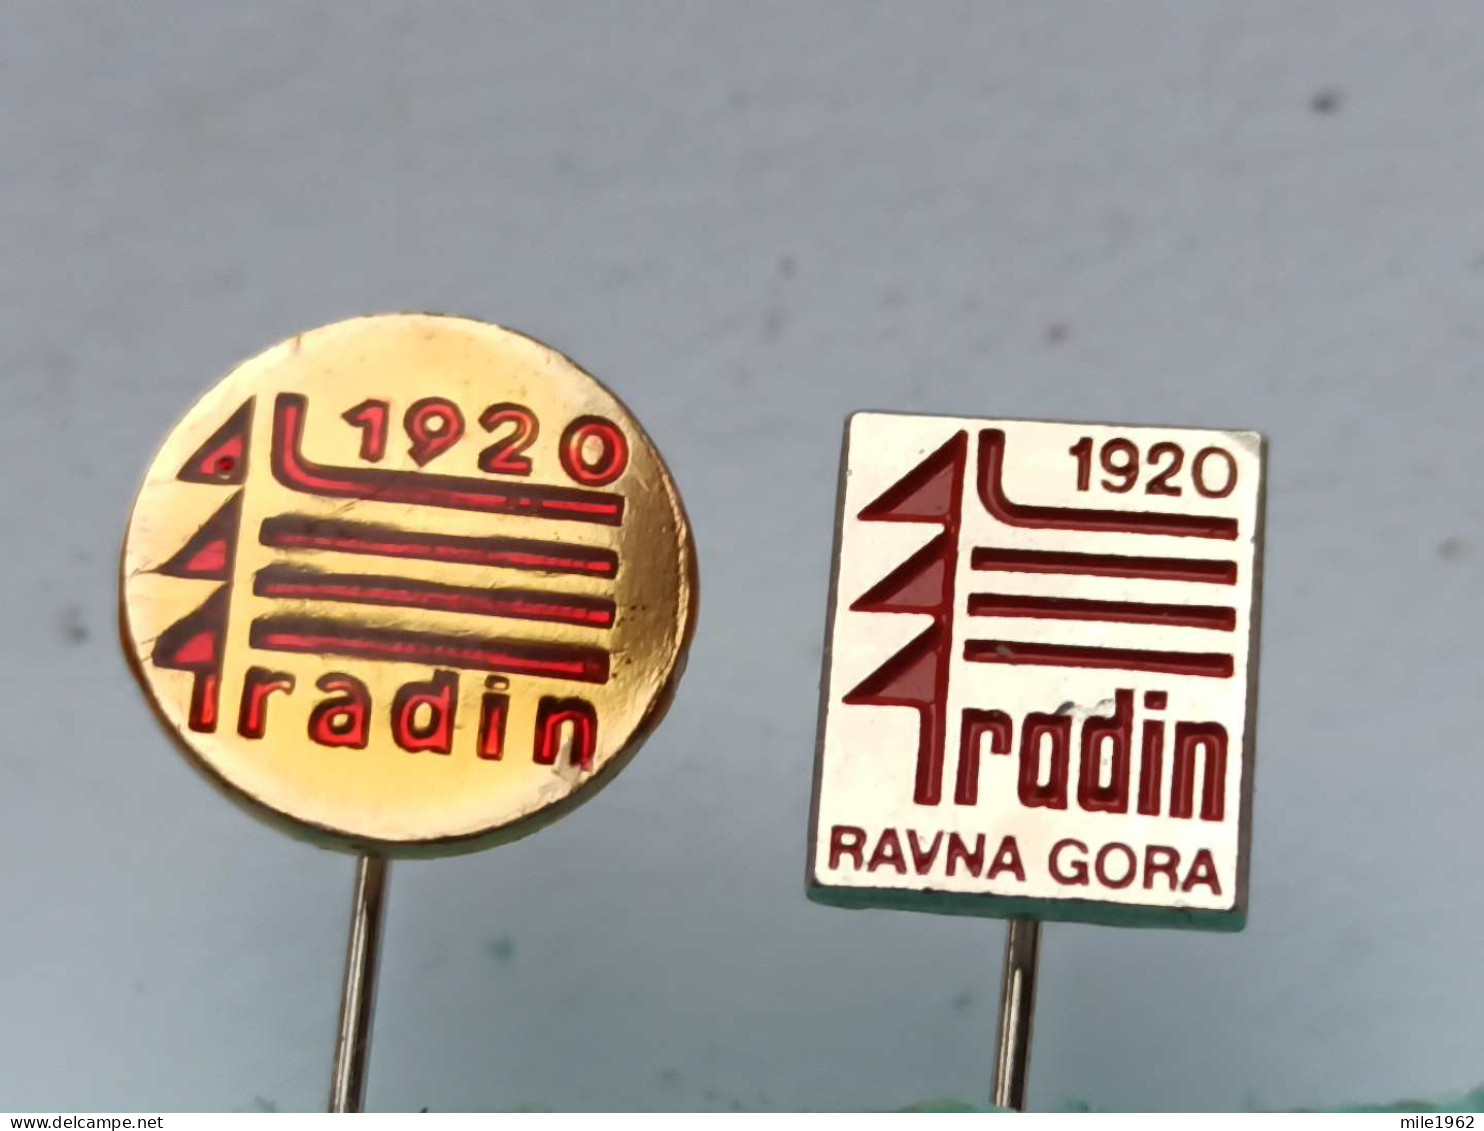 BADGE Z-98-2 - 2 PINS - RADIN RAVNA GORA, SERBIA, WOOD INDUSTRY Industrie Du Bois, MEUBLES, Furniture - Lots